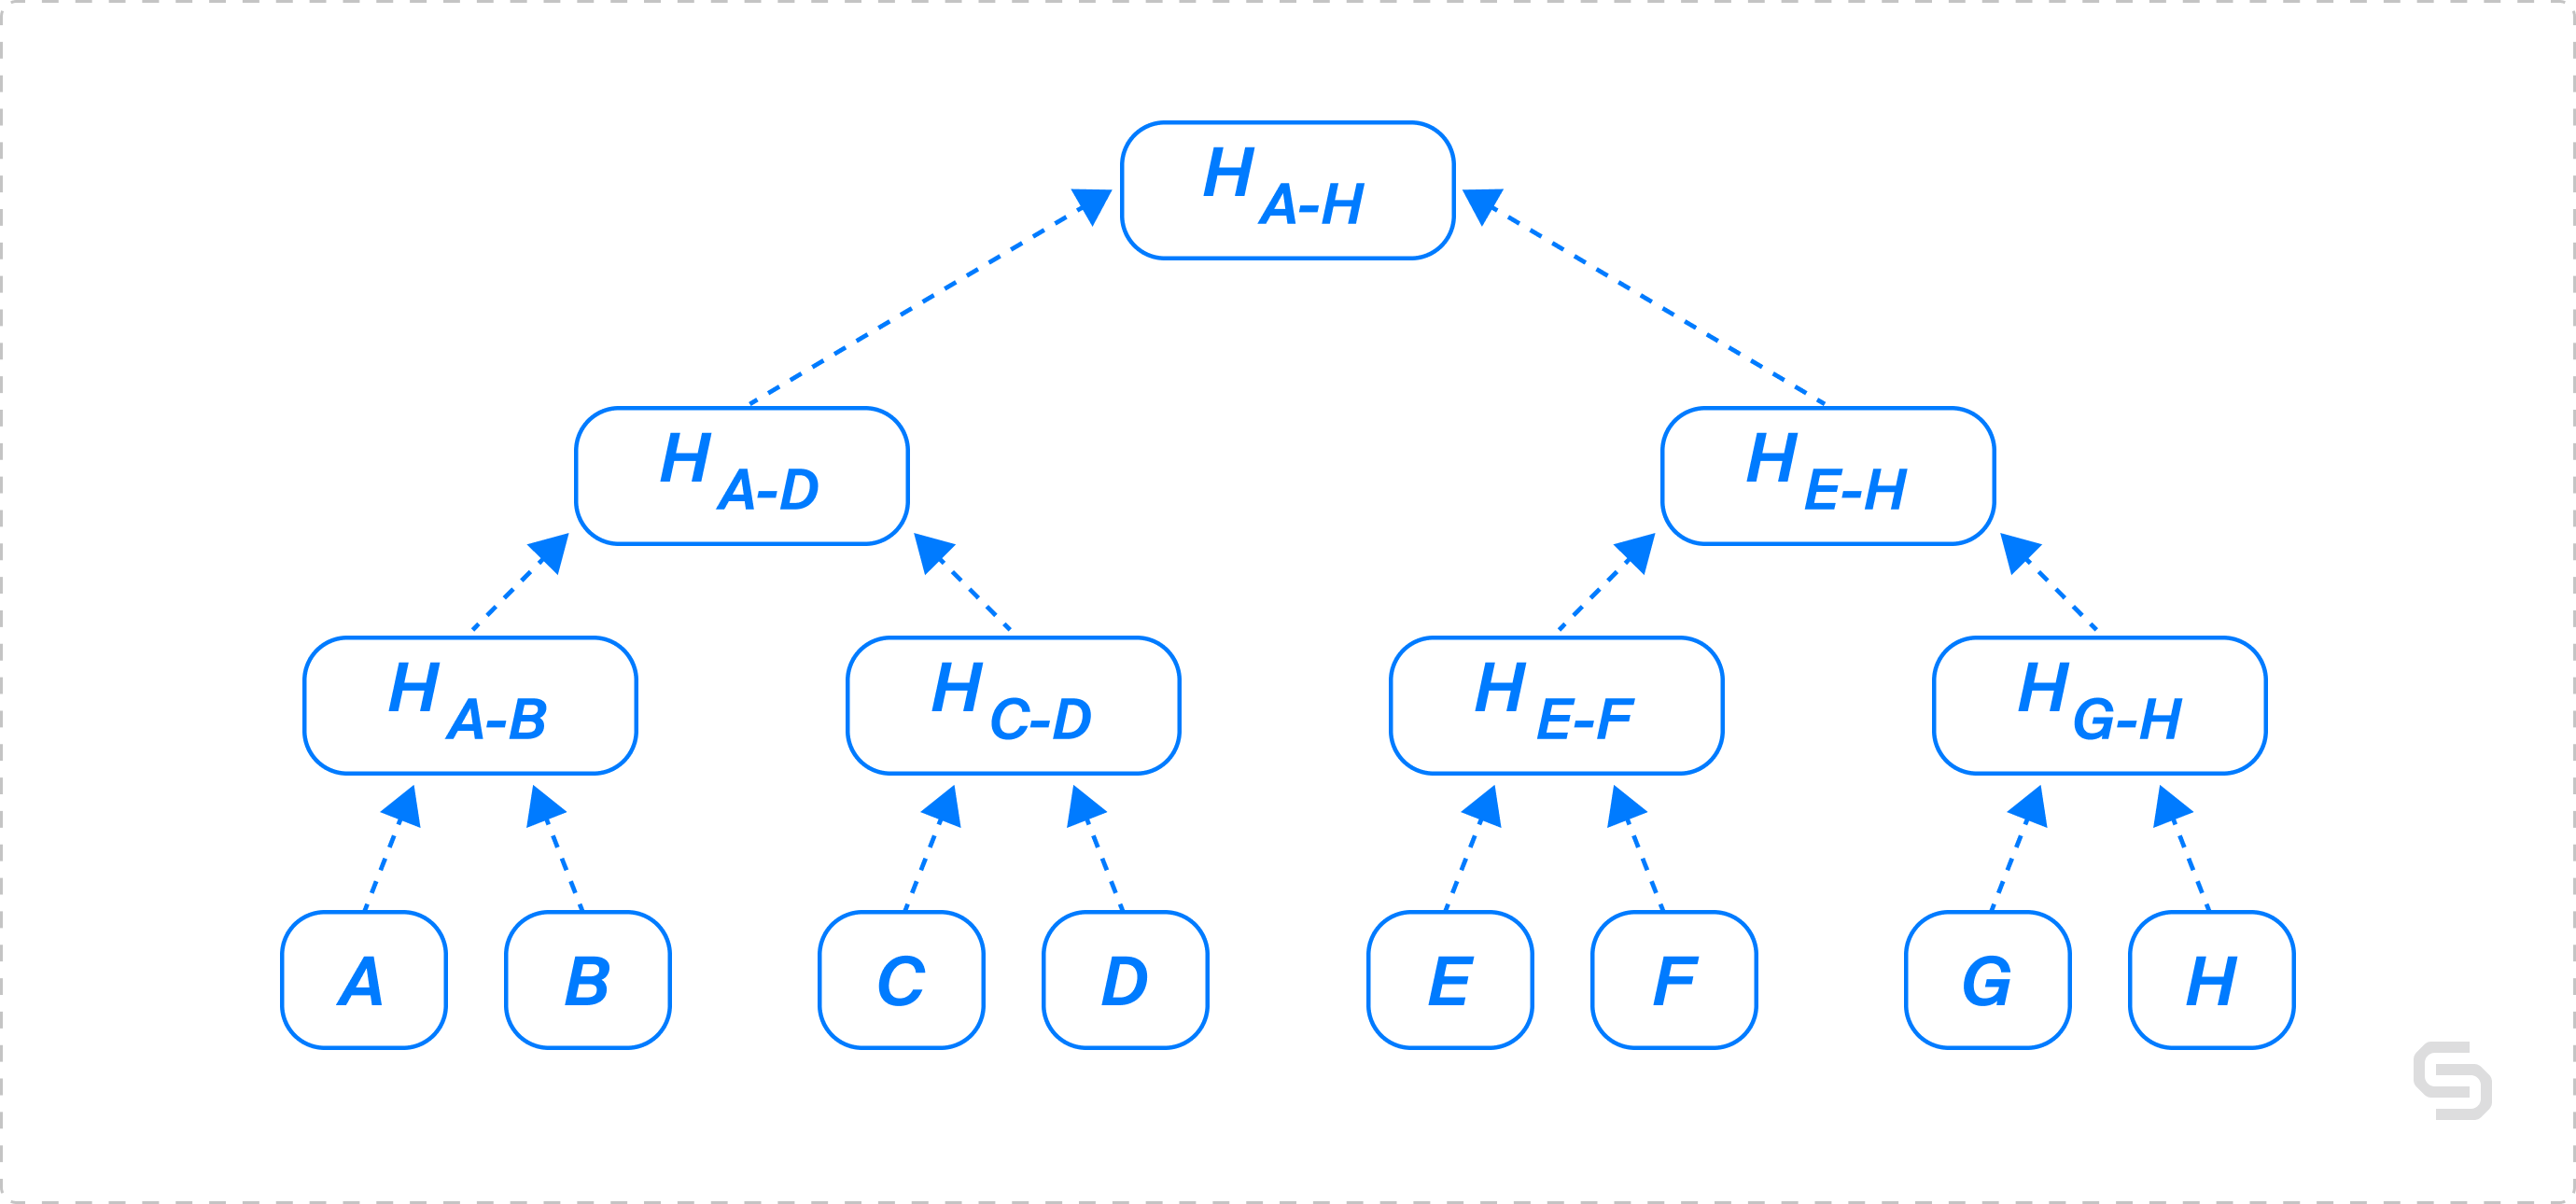 A simplified version of binary Merkle trie